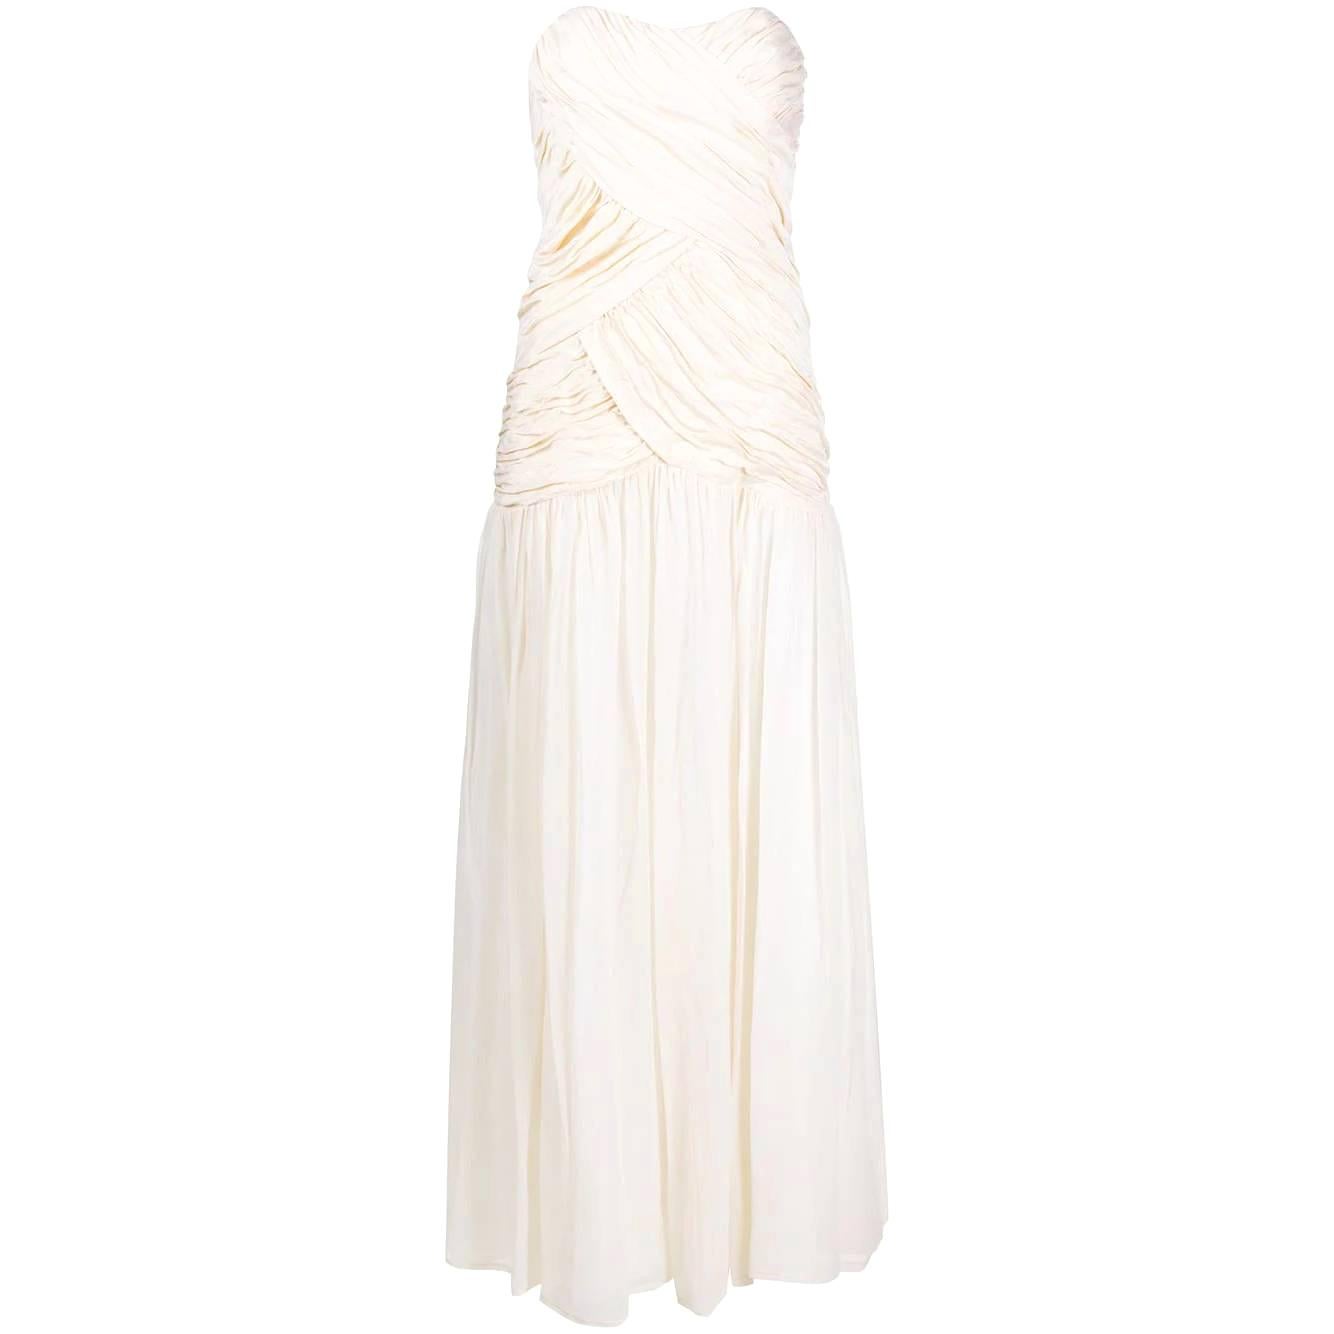 1980s Ivory Heart Neckline Wedding Dress